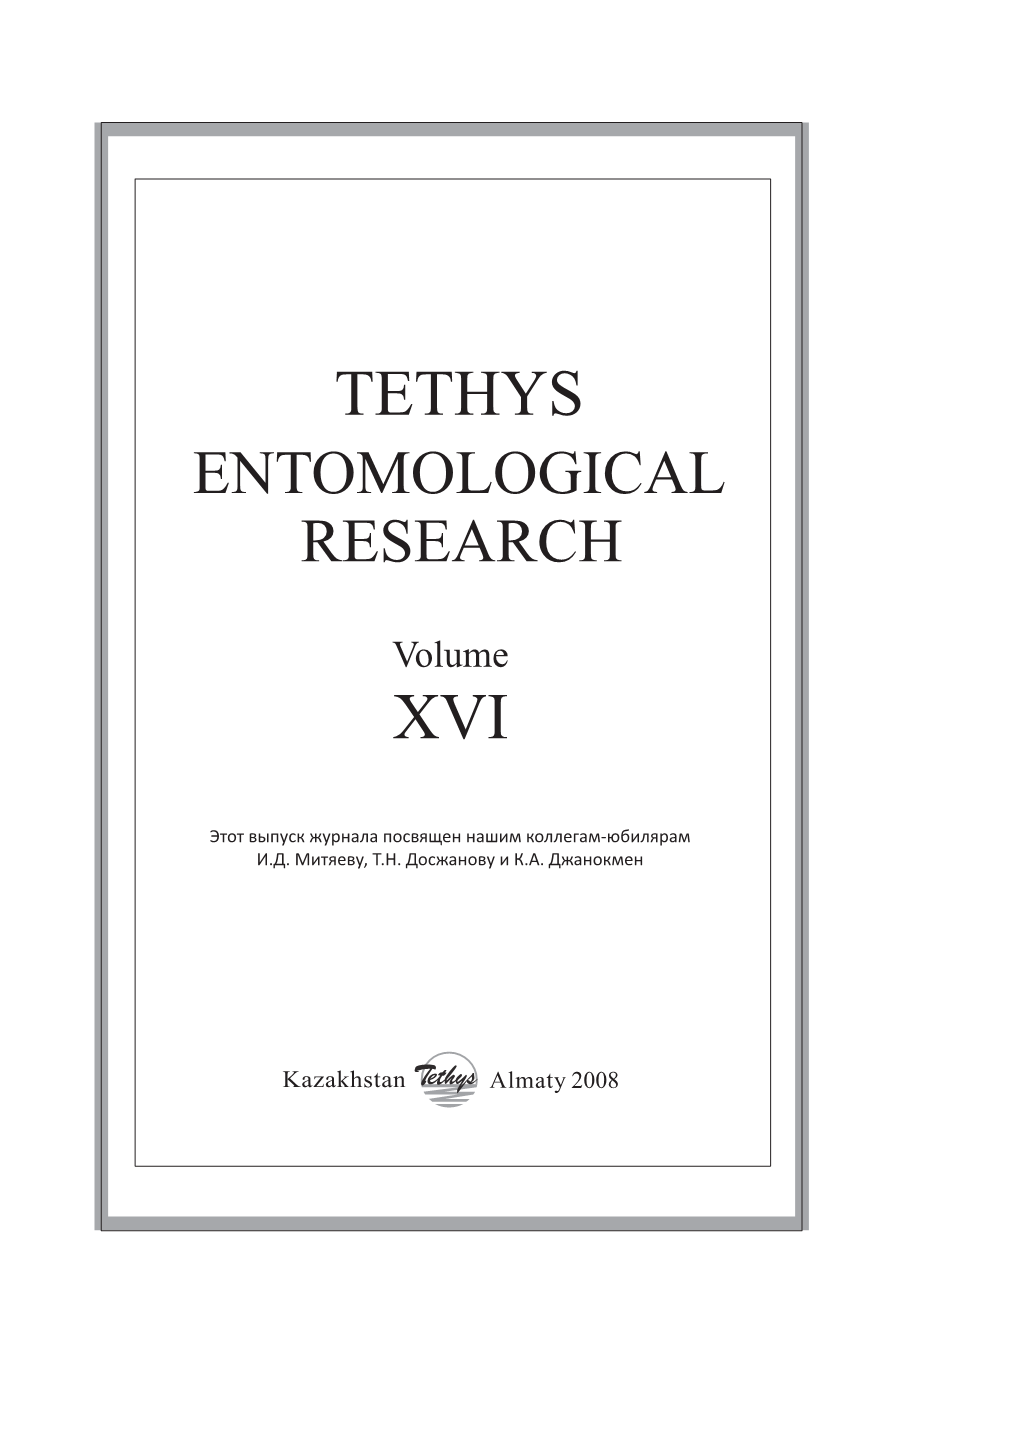 Tethys Entomological Research